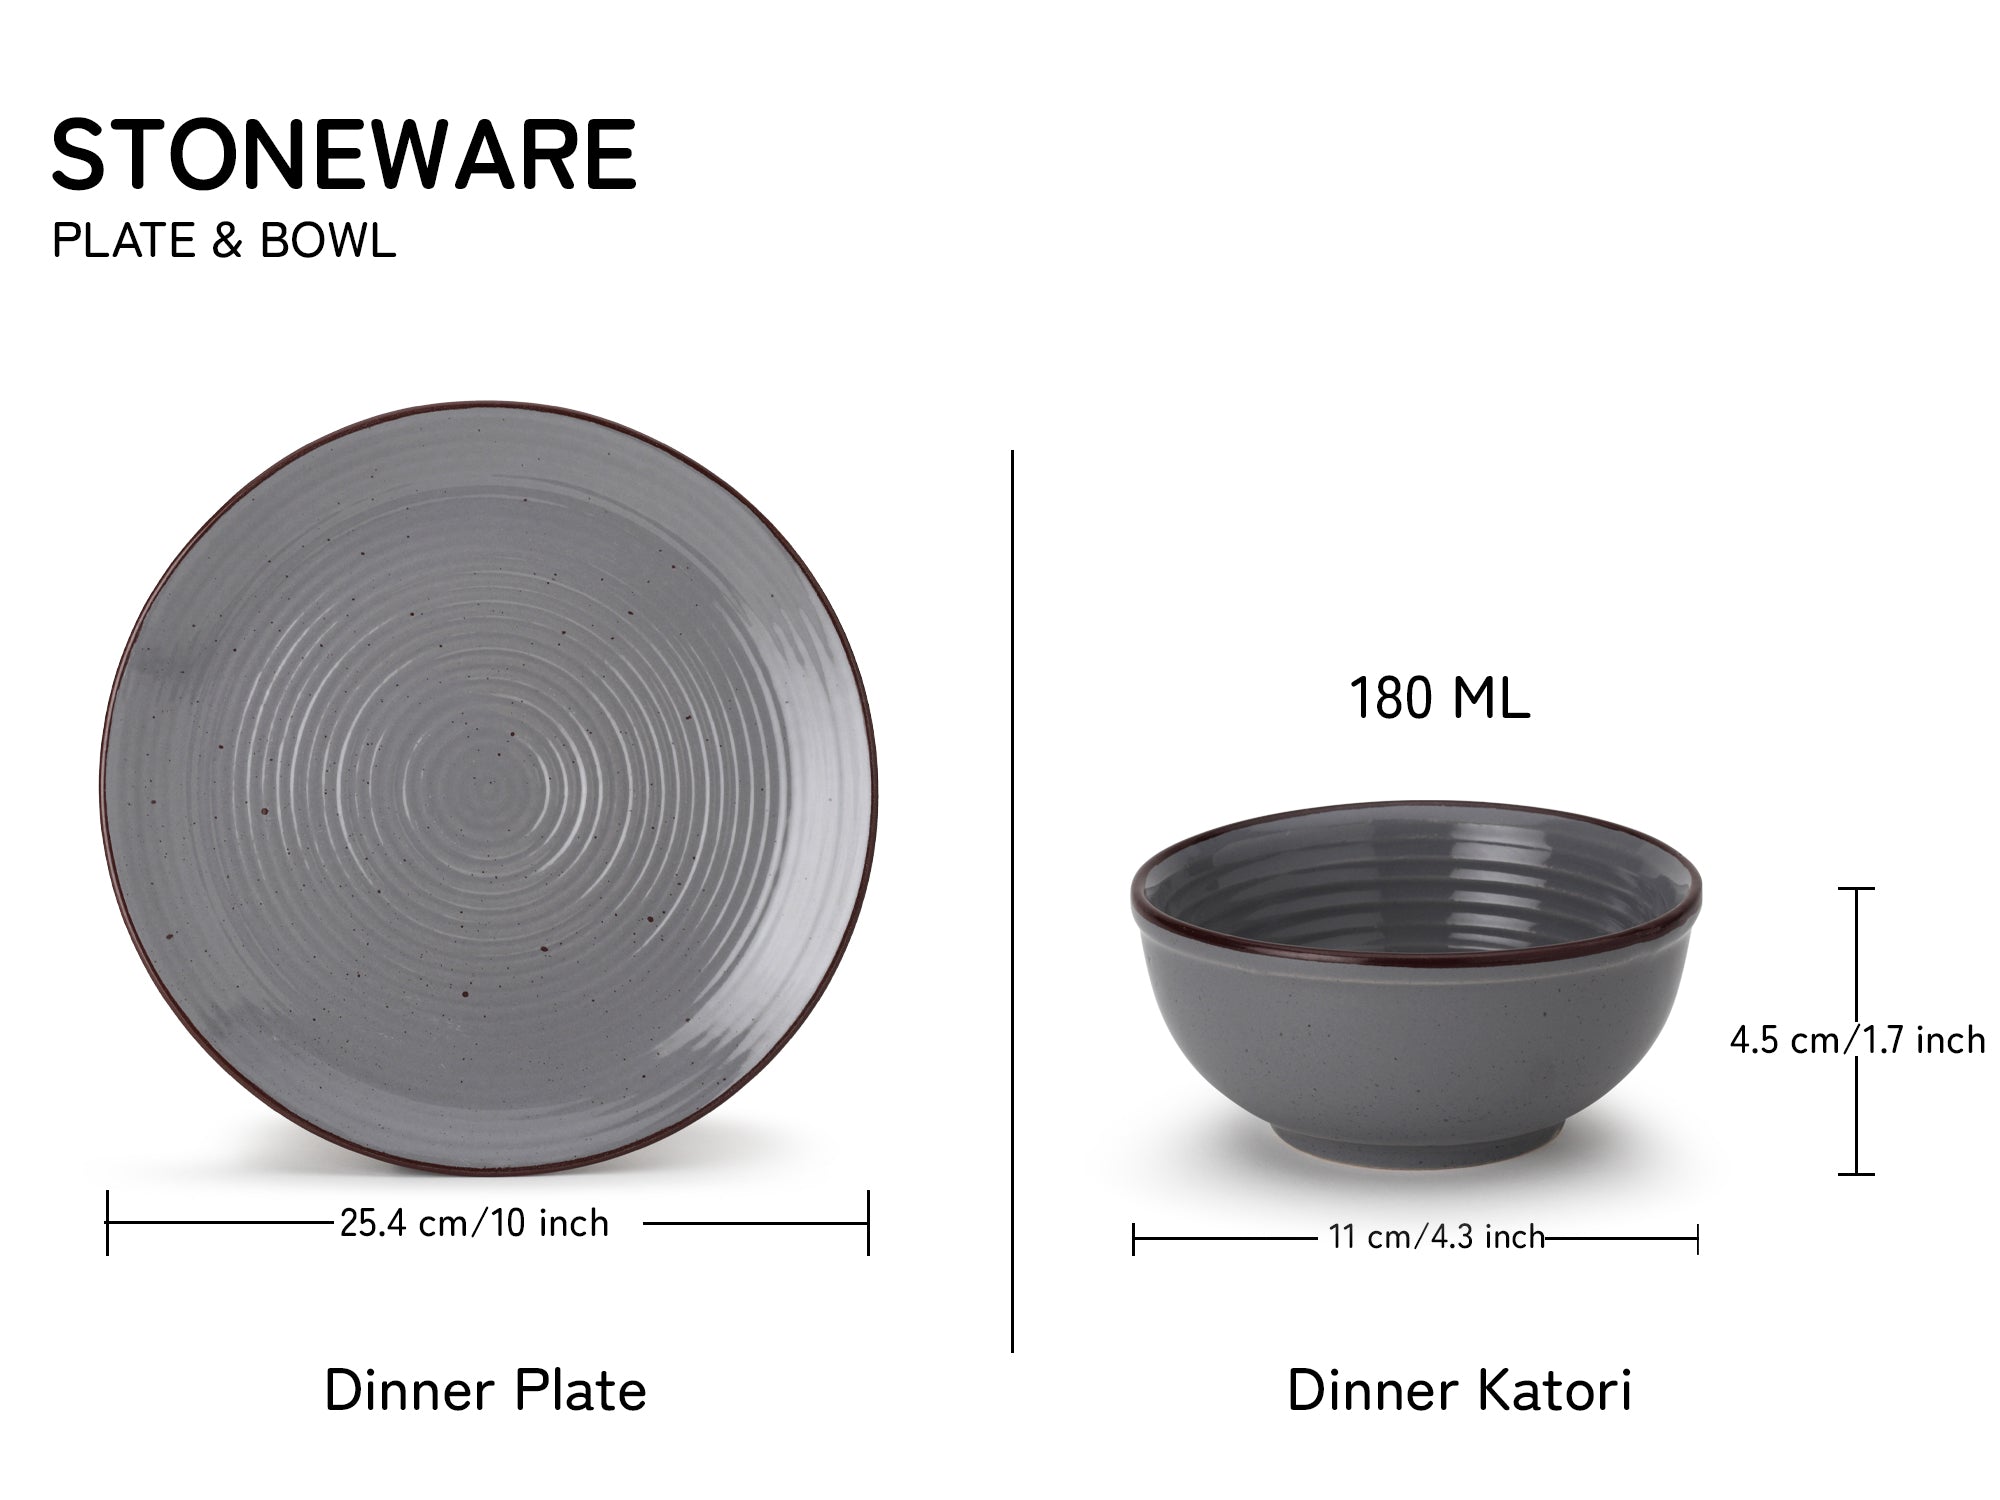 Graphite Noir Dining Ensemble - 6 Dinner Plates & 6 Bowls/Katoris